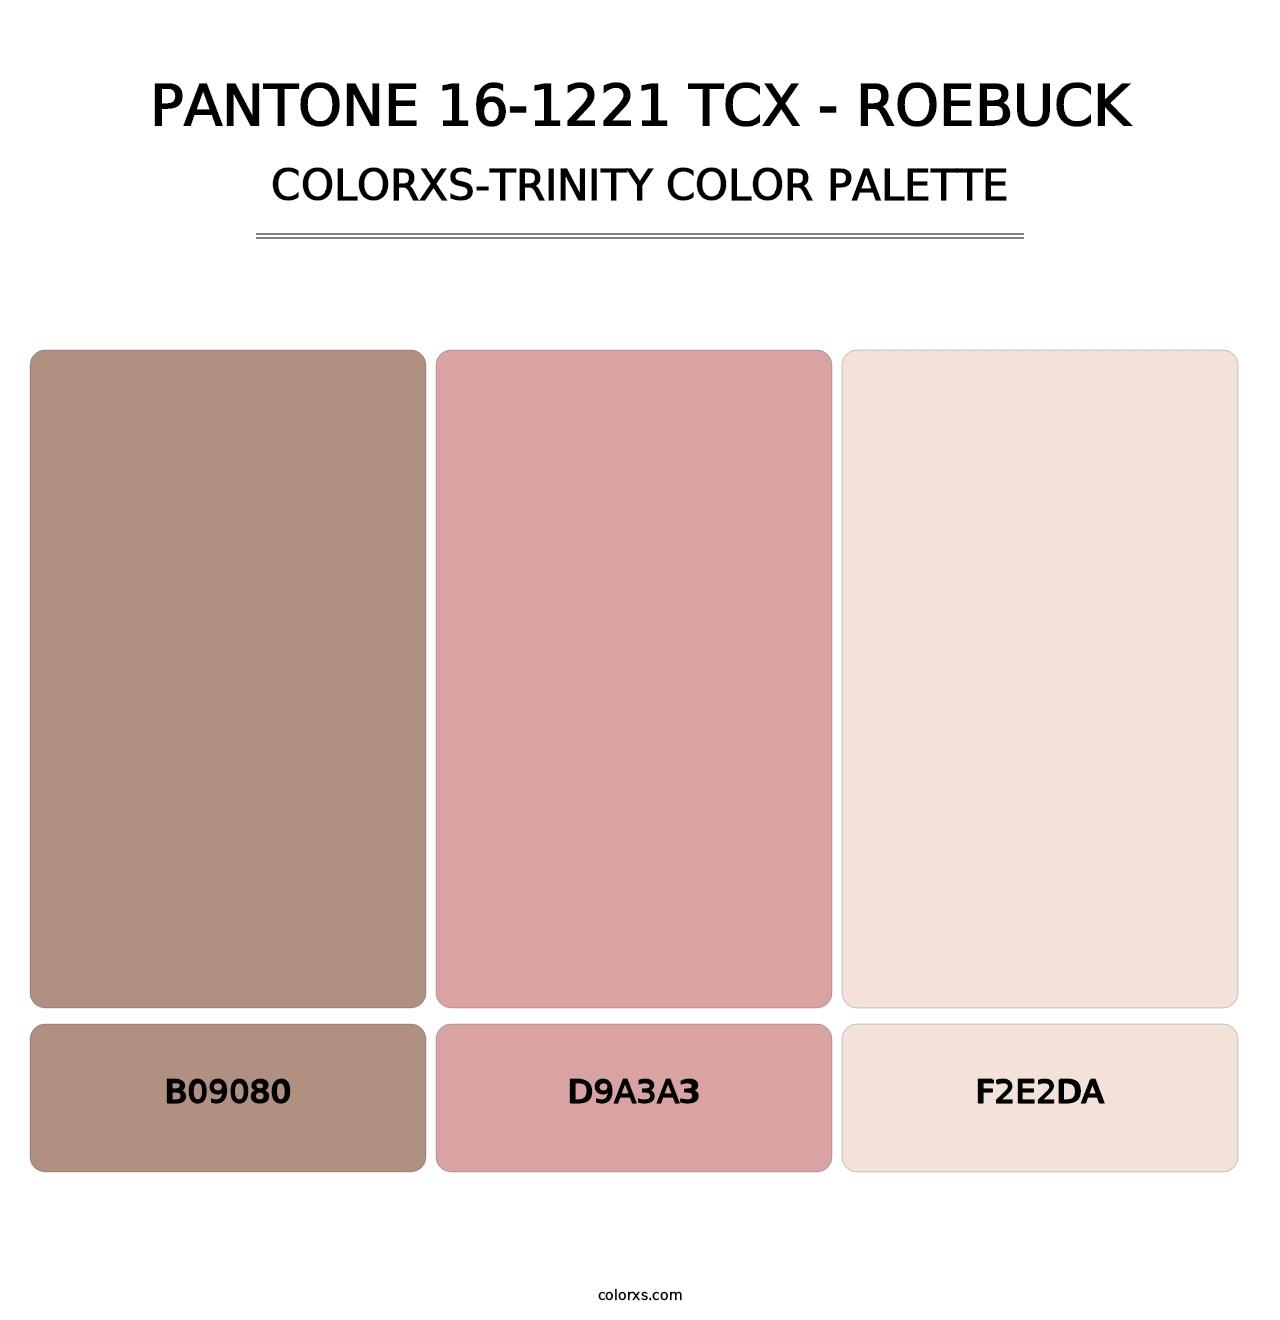 PANTONE 16-1221 TCX - Roebuck - Colorxs Trinity Palette